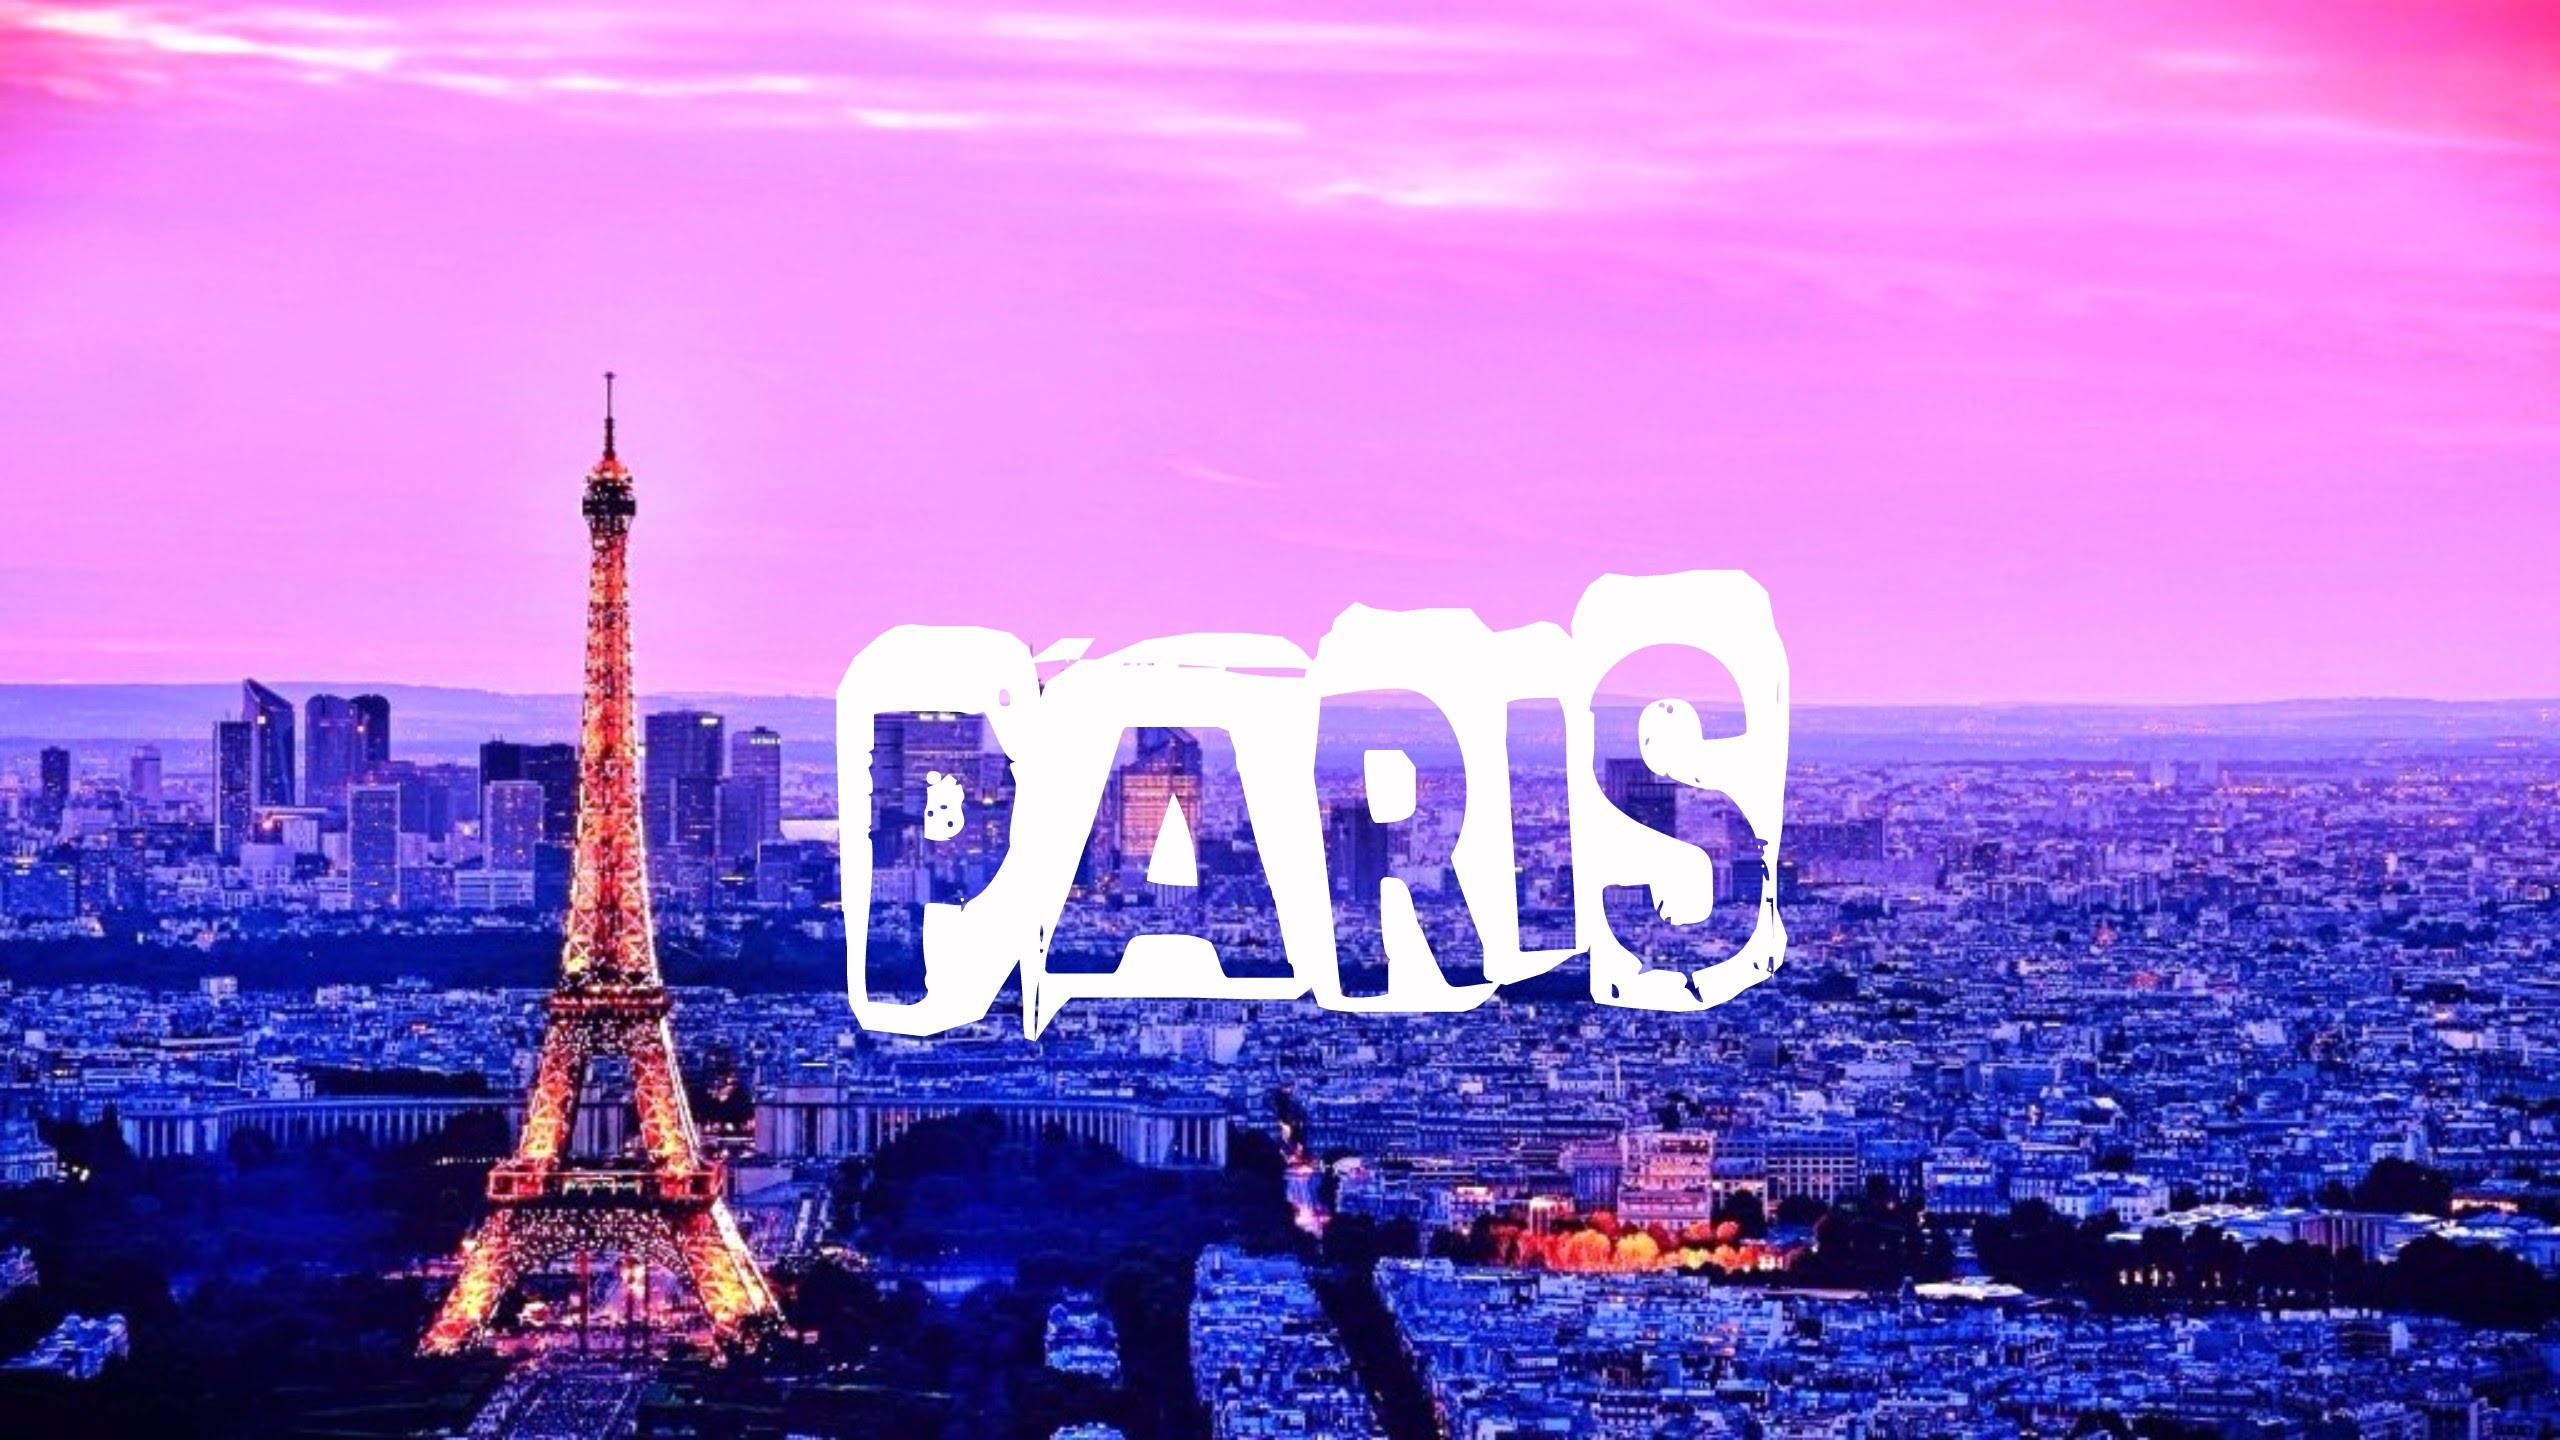 2560x1440 ... France - YouTube Wallpaper Paris Theme - WallpaperSafari ...